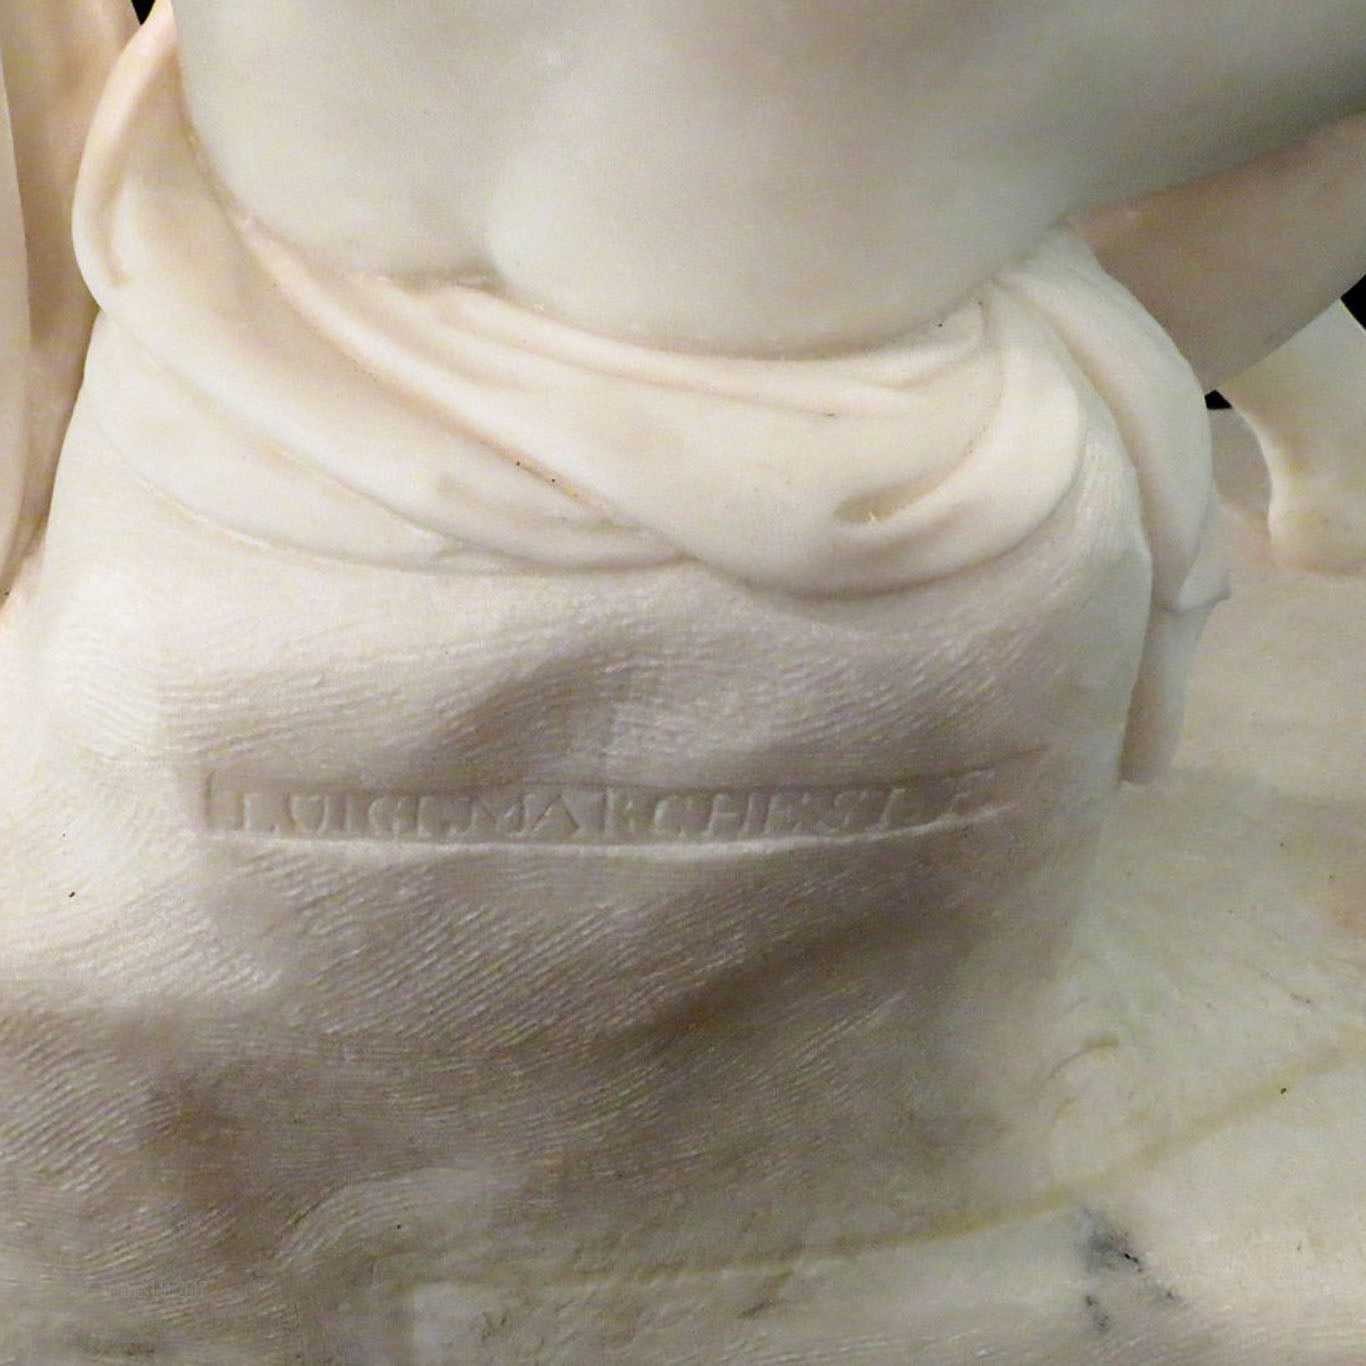 AAA* An Important Italian marble by Luigi Marchesi